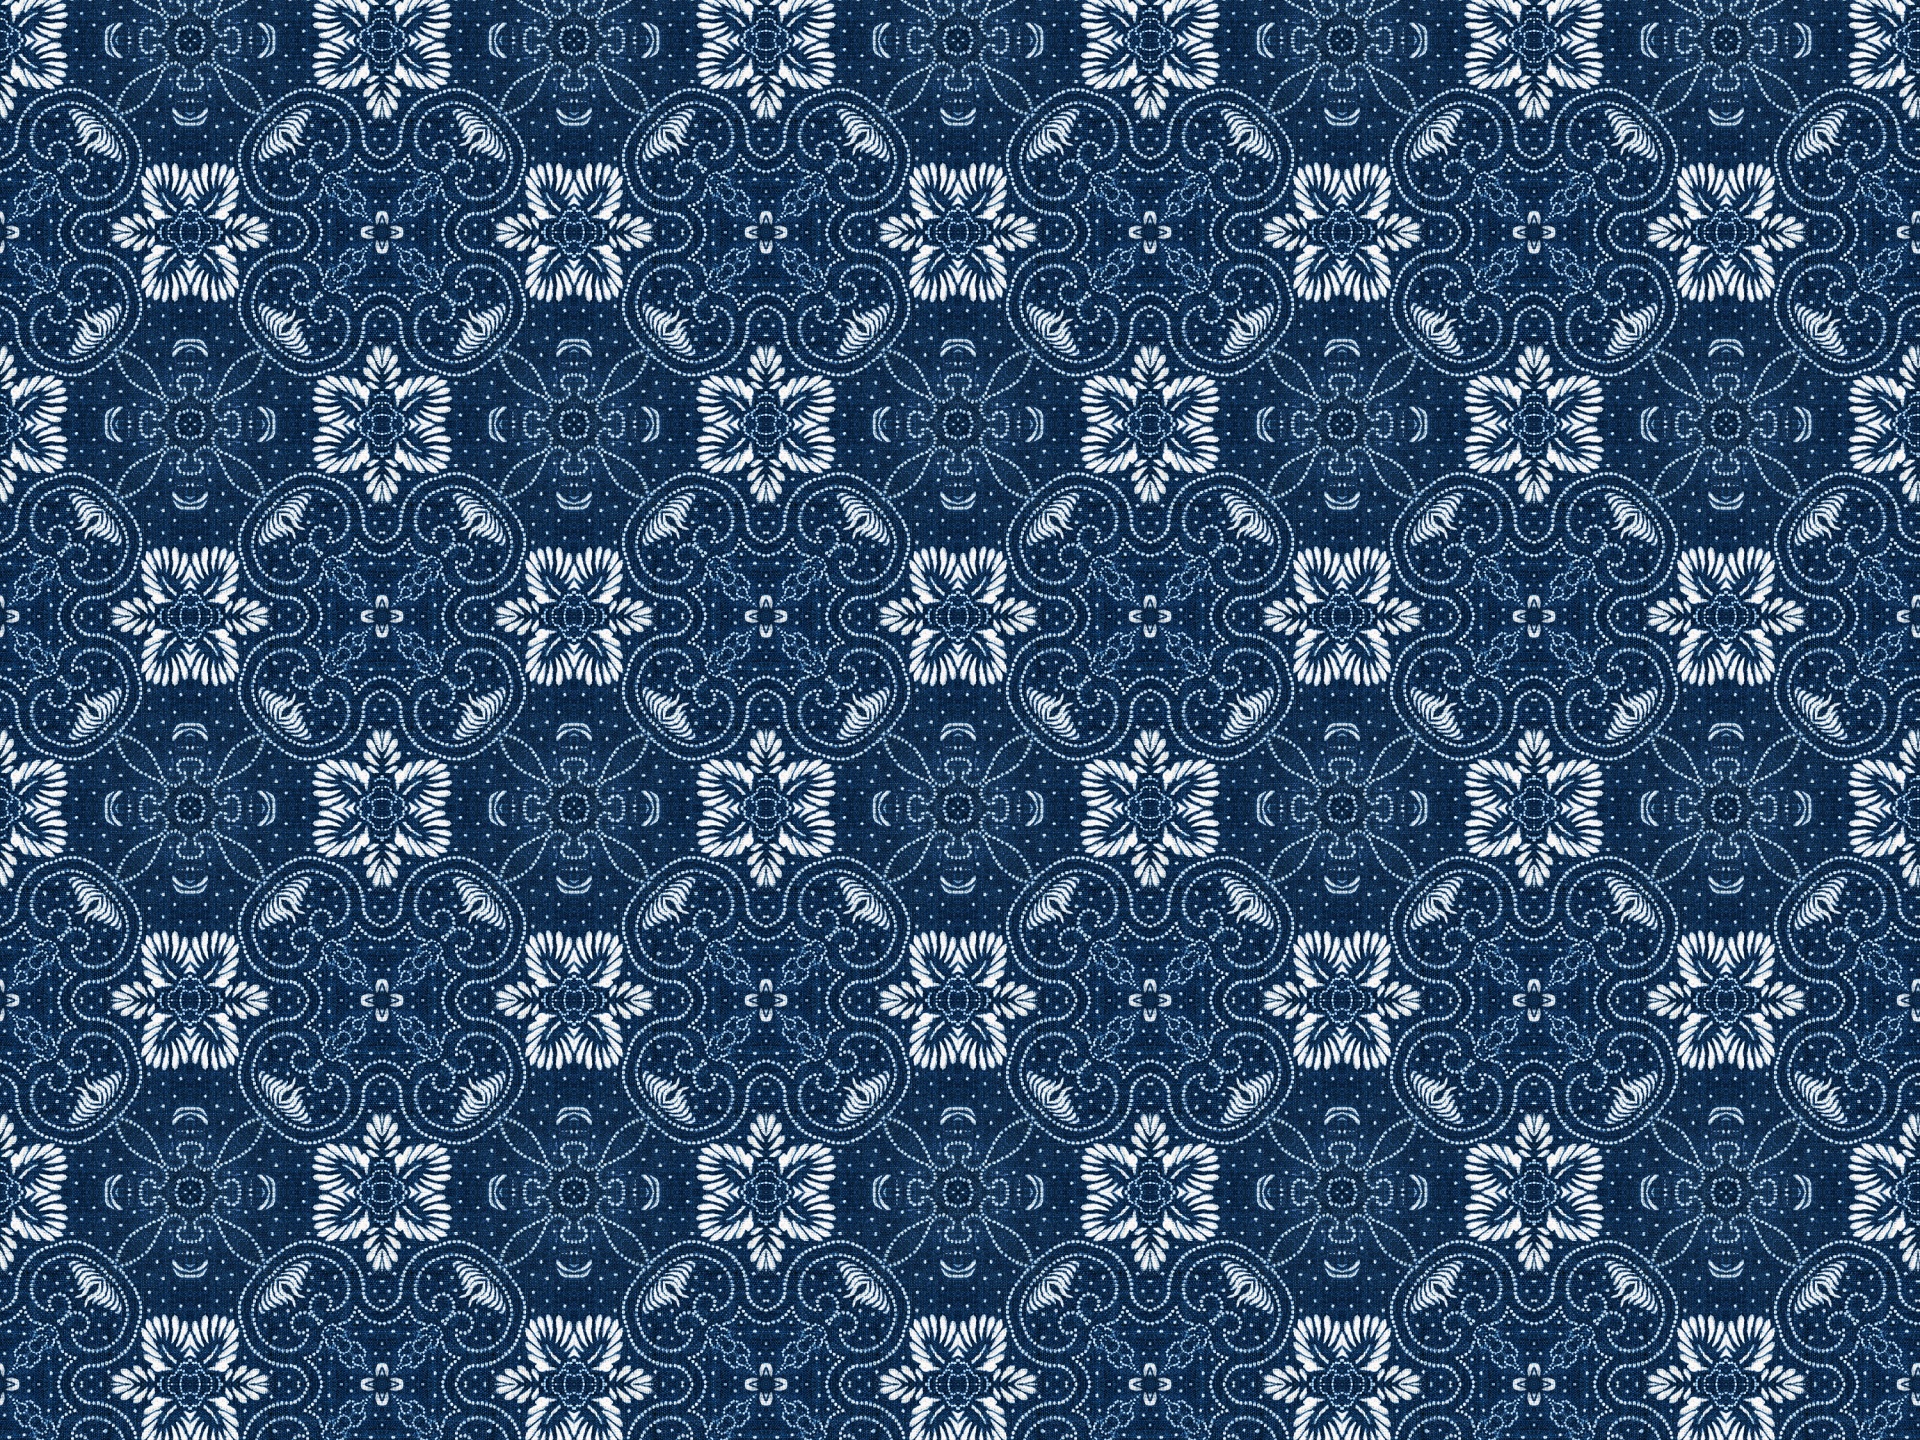 Denim fabric pattern background